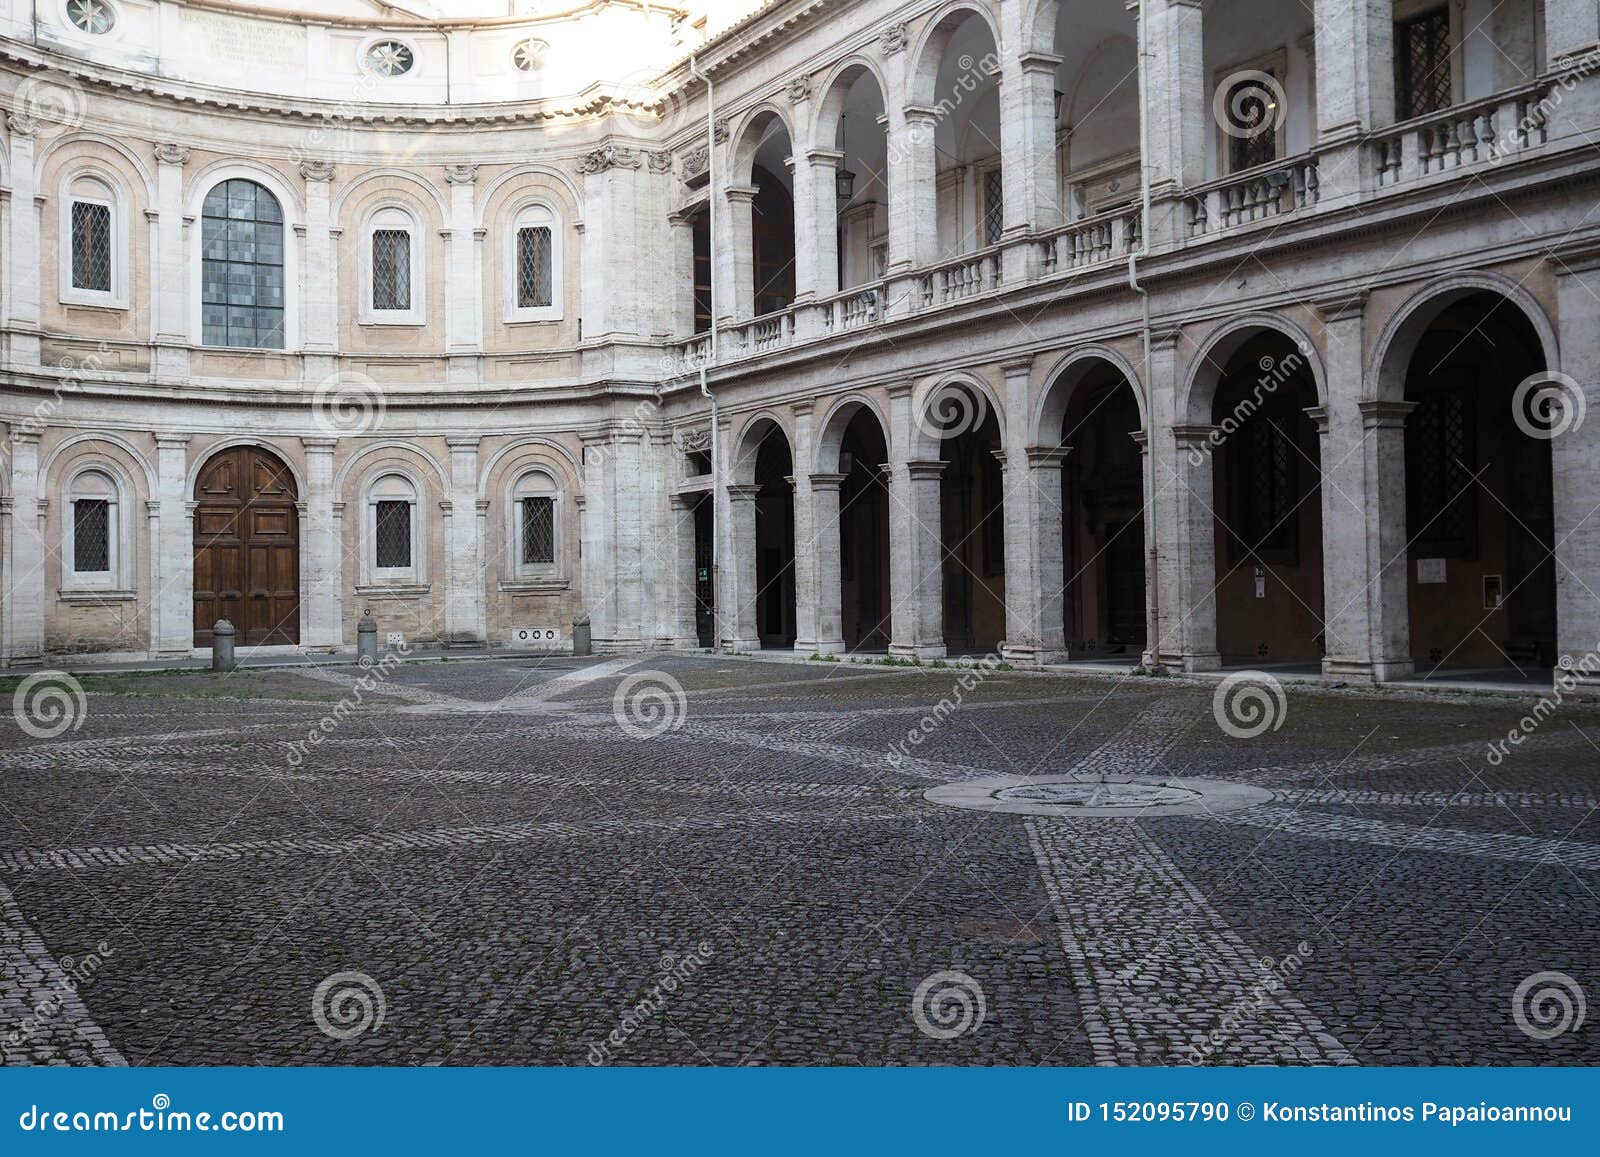 courtyard of giacomo della porta in rome, italy